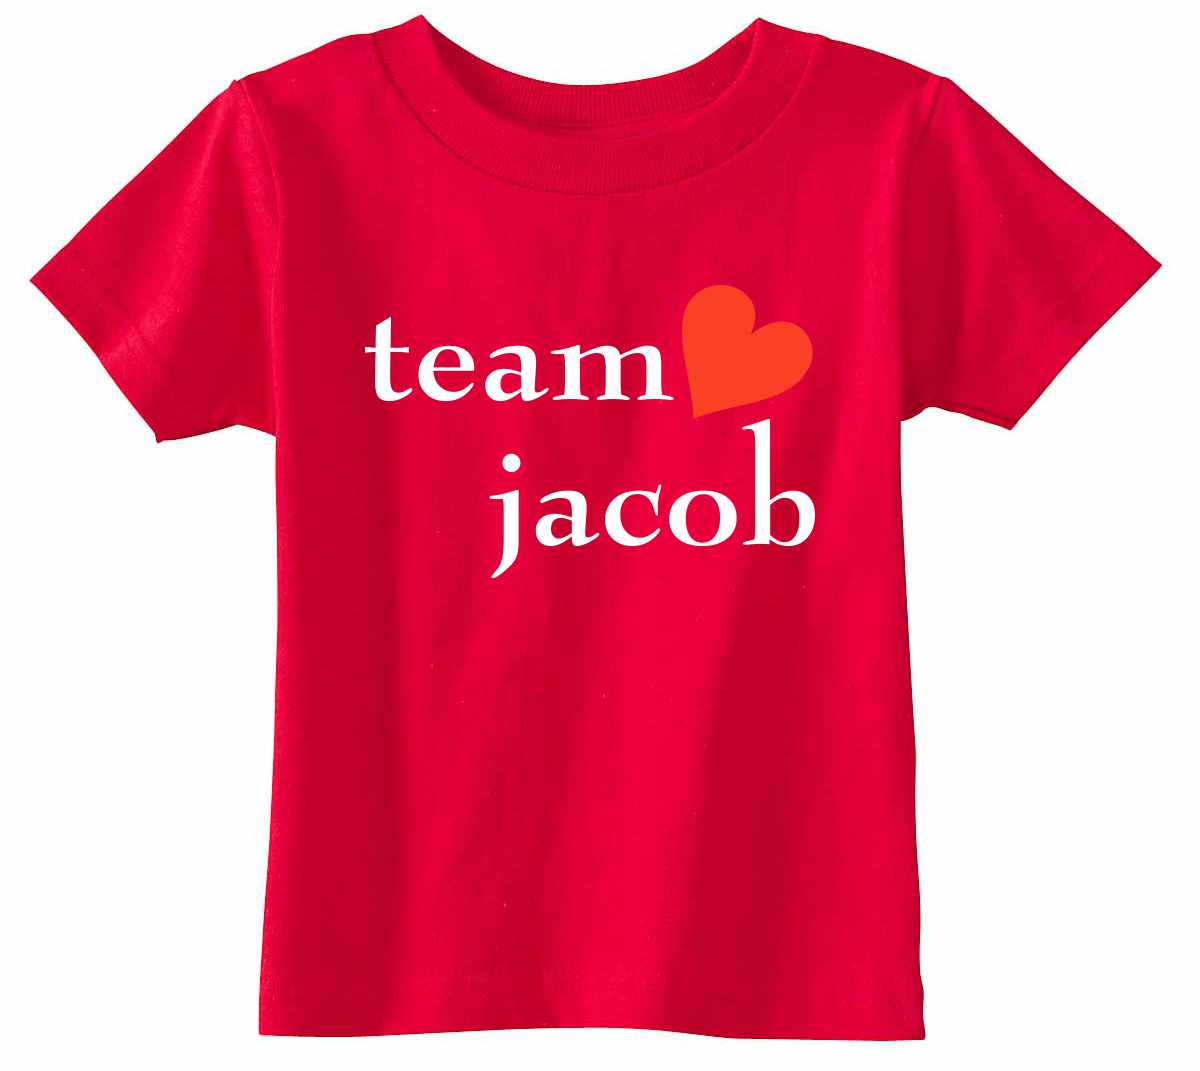 TEAM JACOB Infant/Toddler T-Shirt (#275-7)